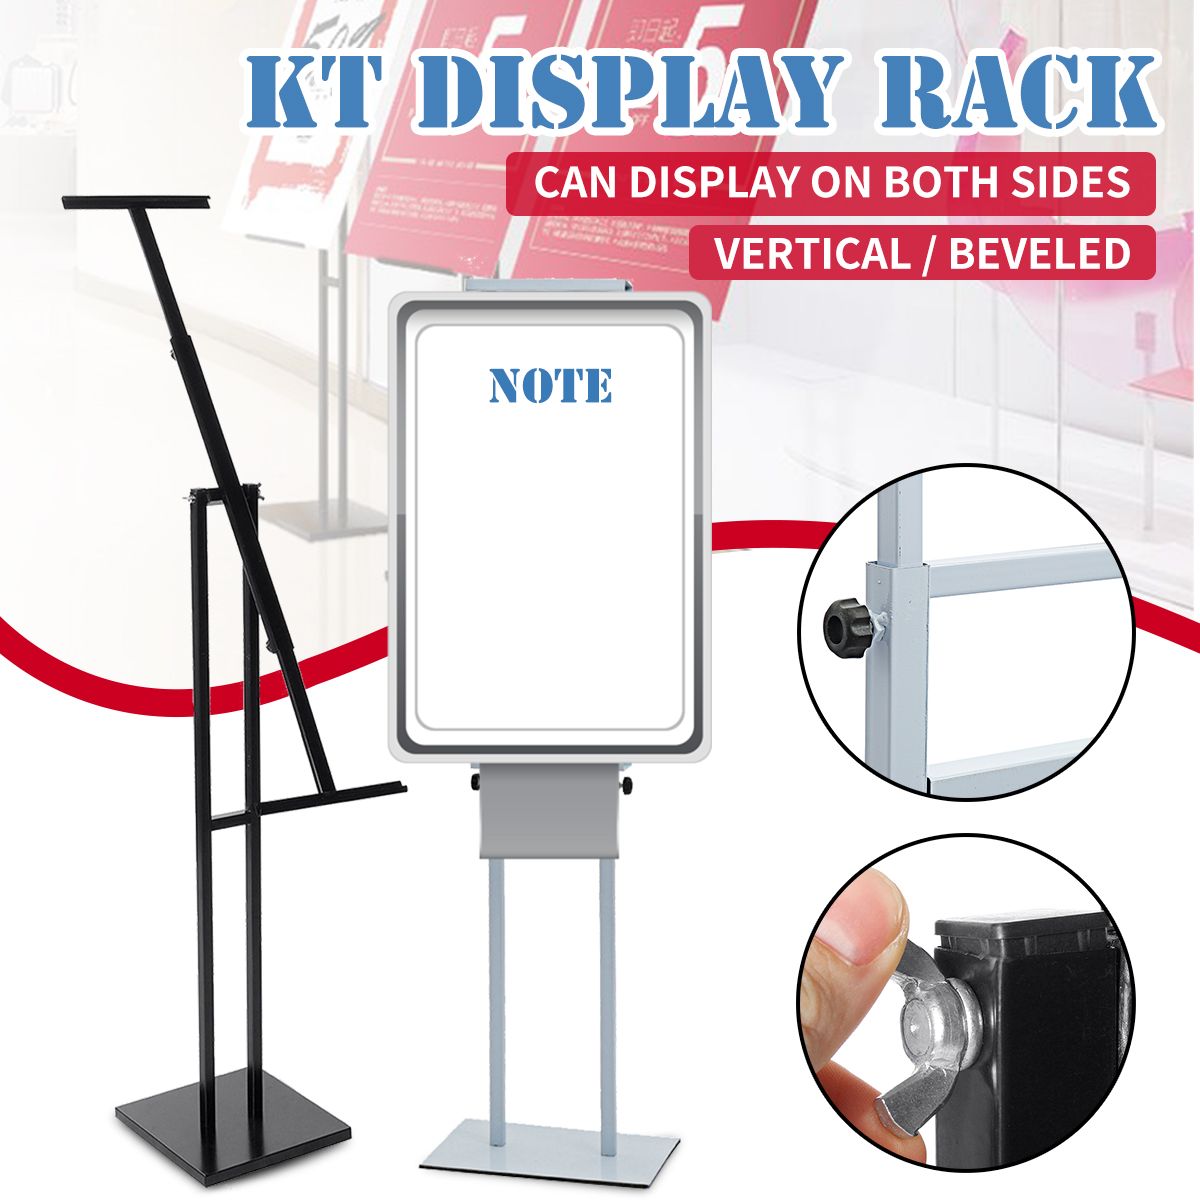 Adjustable-Two-sided-KT-Board-Poster-Stand-Shelf-Rack-1607495